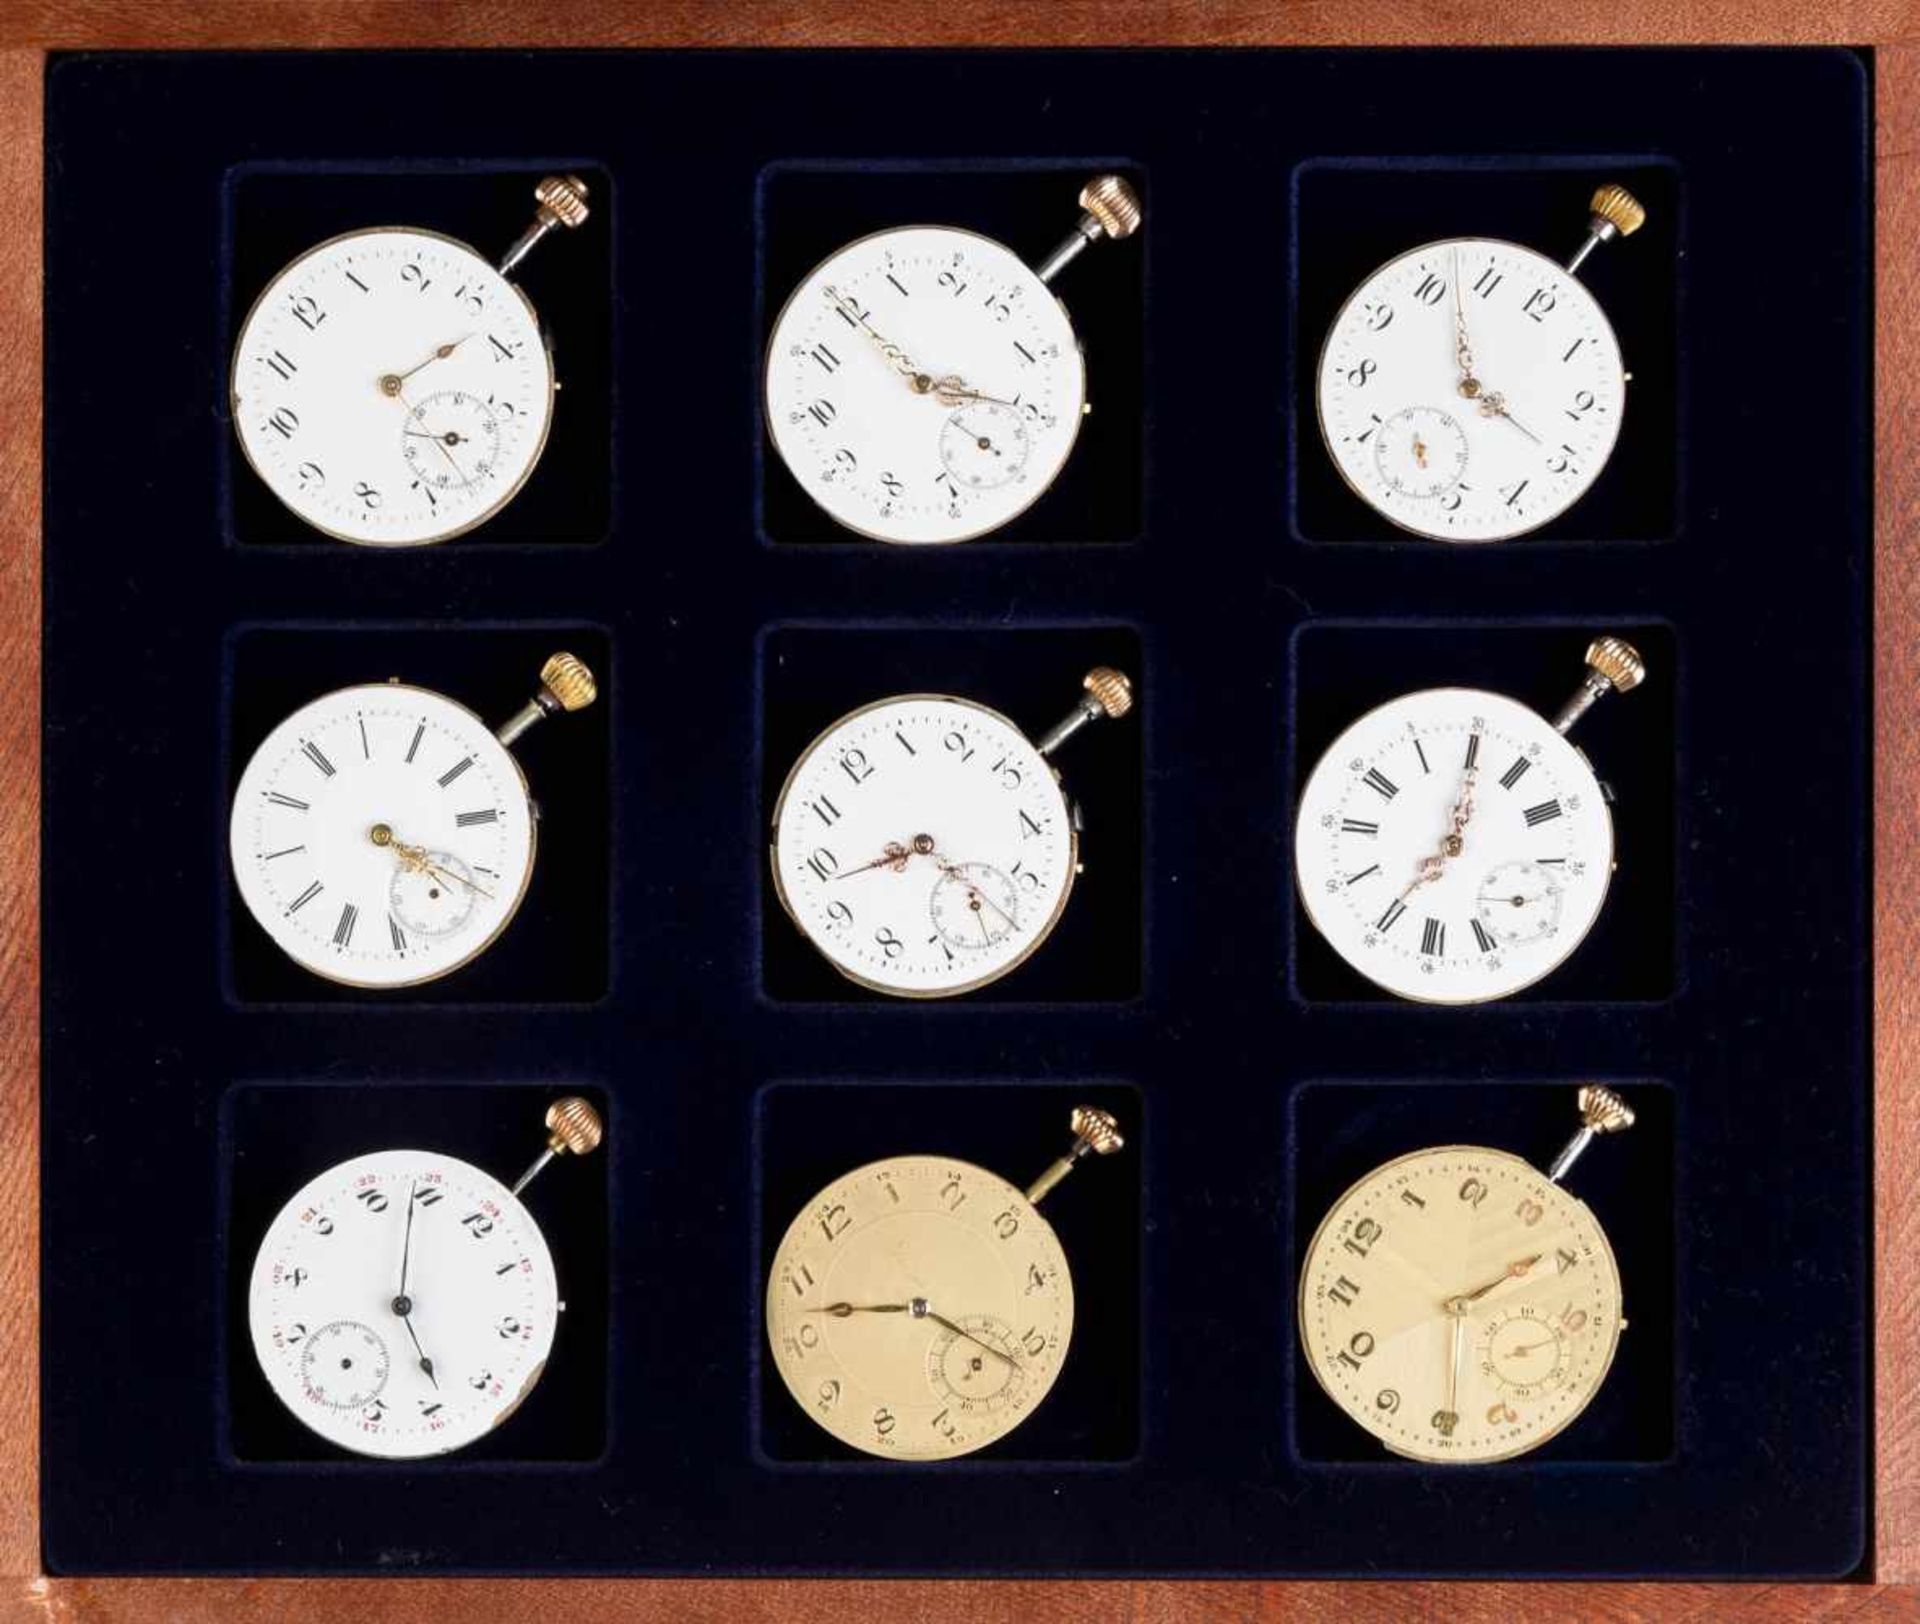 KONVOLUT TASCHENUHRWERKE U.A. 'SYSTEM GLASHÜTTE' 9-tlg. Uhrwerke für Taschenuhren, u.a. 'System